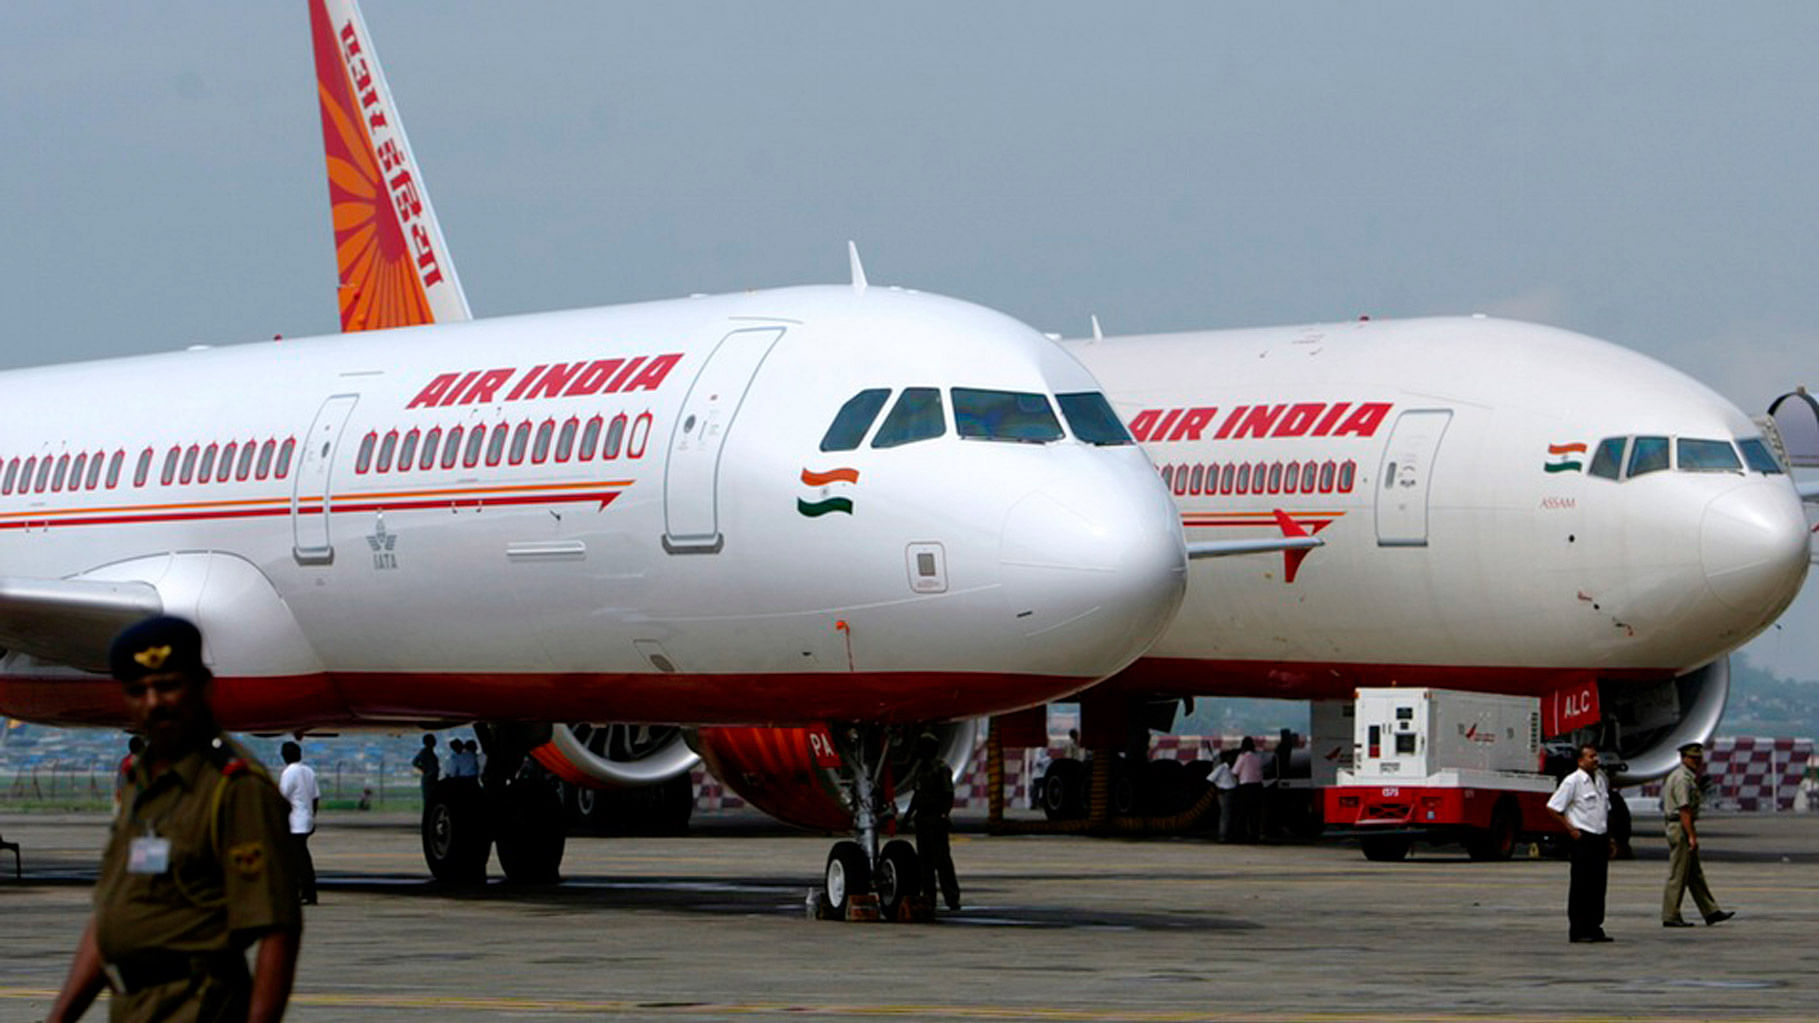 File photo of an Air India aircraft. (Photo: Reuters)